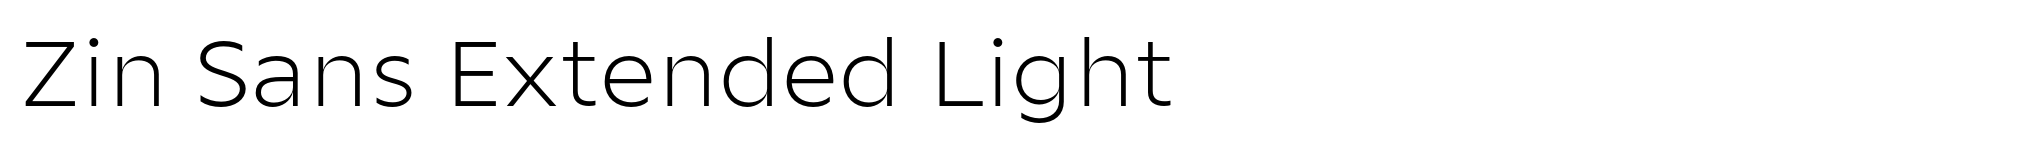 Zin Sans Extended Light image